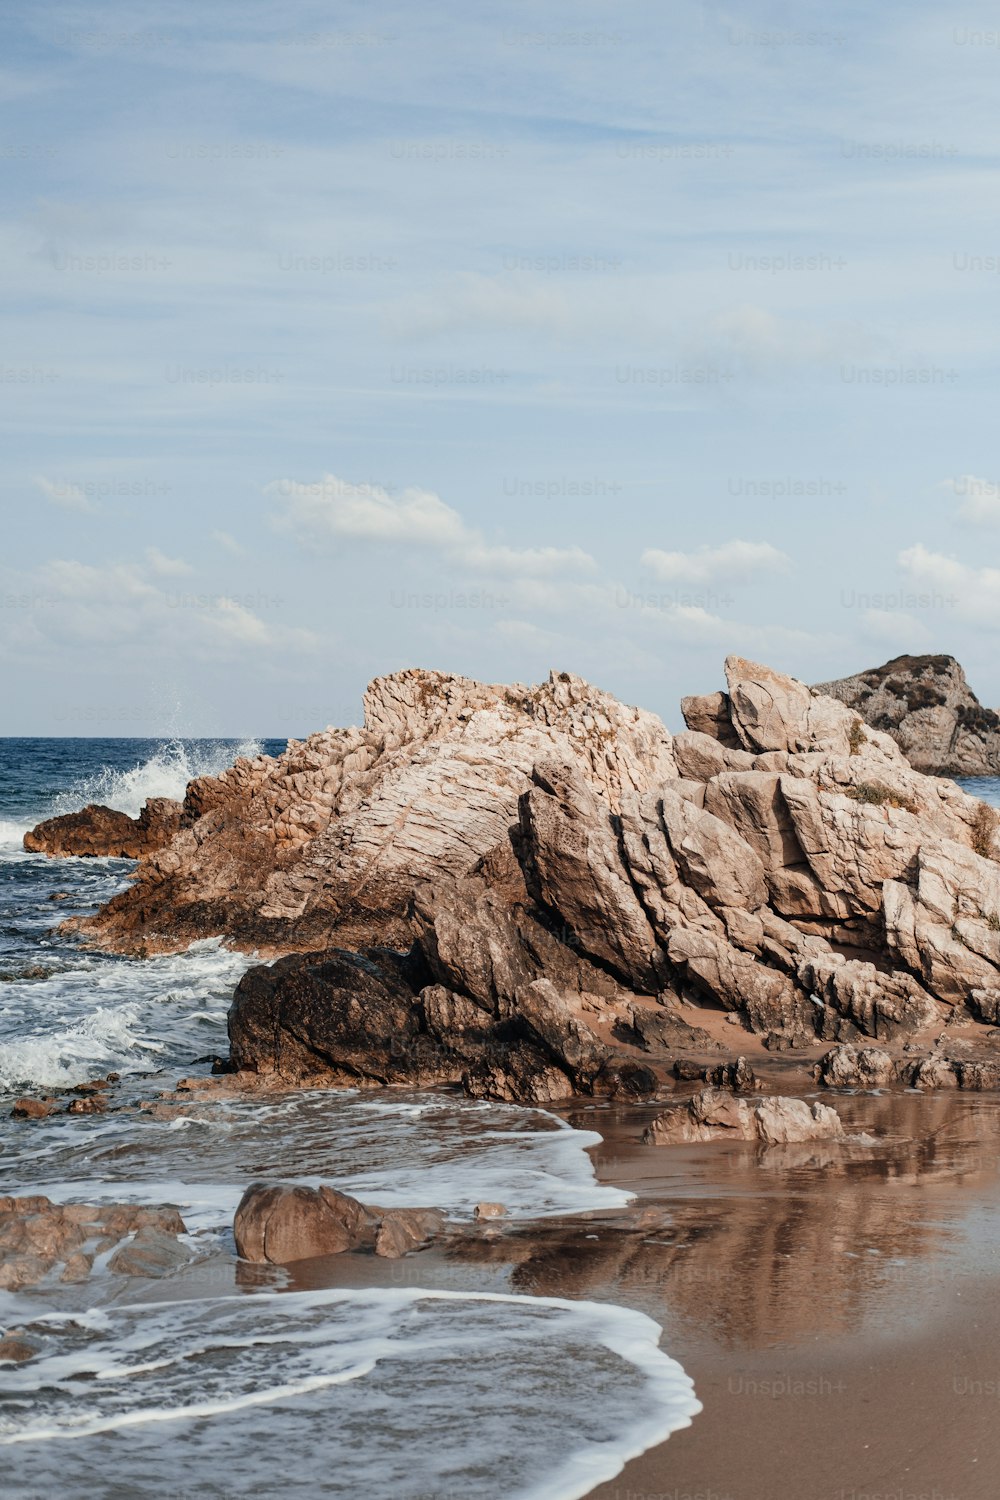 a rock formation on the beach near the ocean